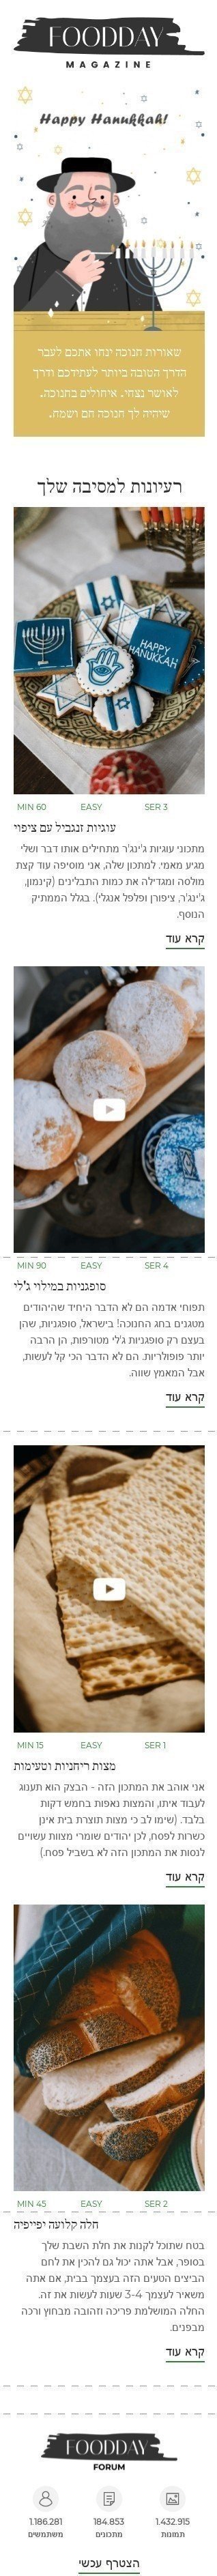 Hanukkah Email Template «Hanukkah sameach» for Food industry mobile view